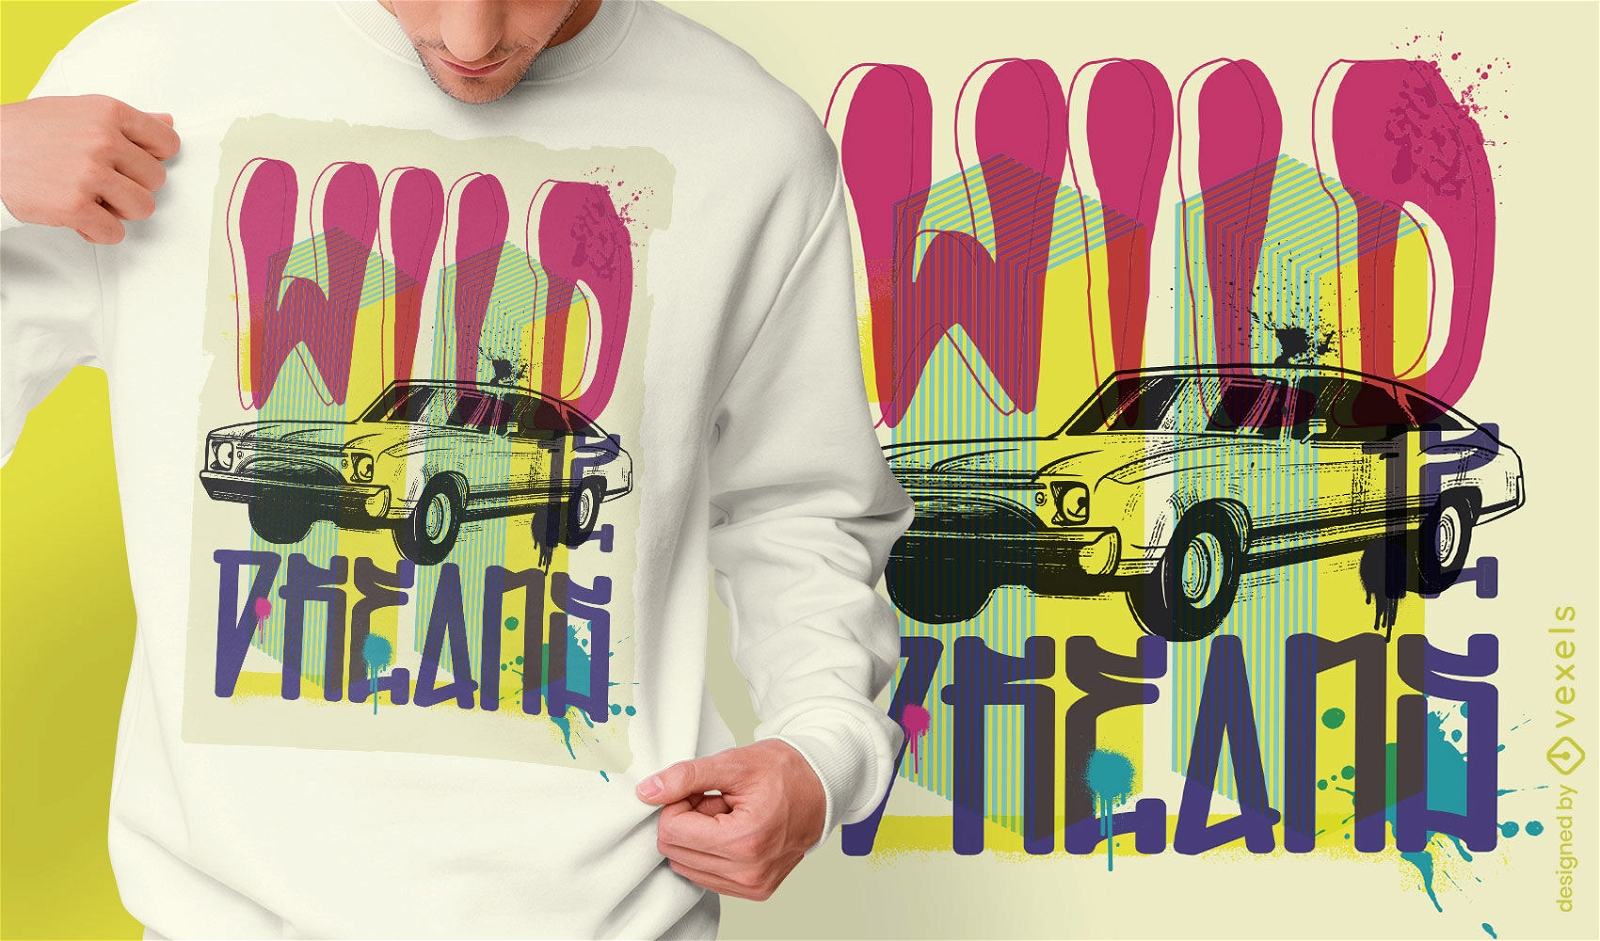 Car vehicle urban graffiti t-shirt design